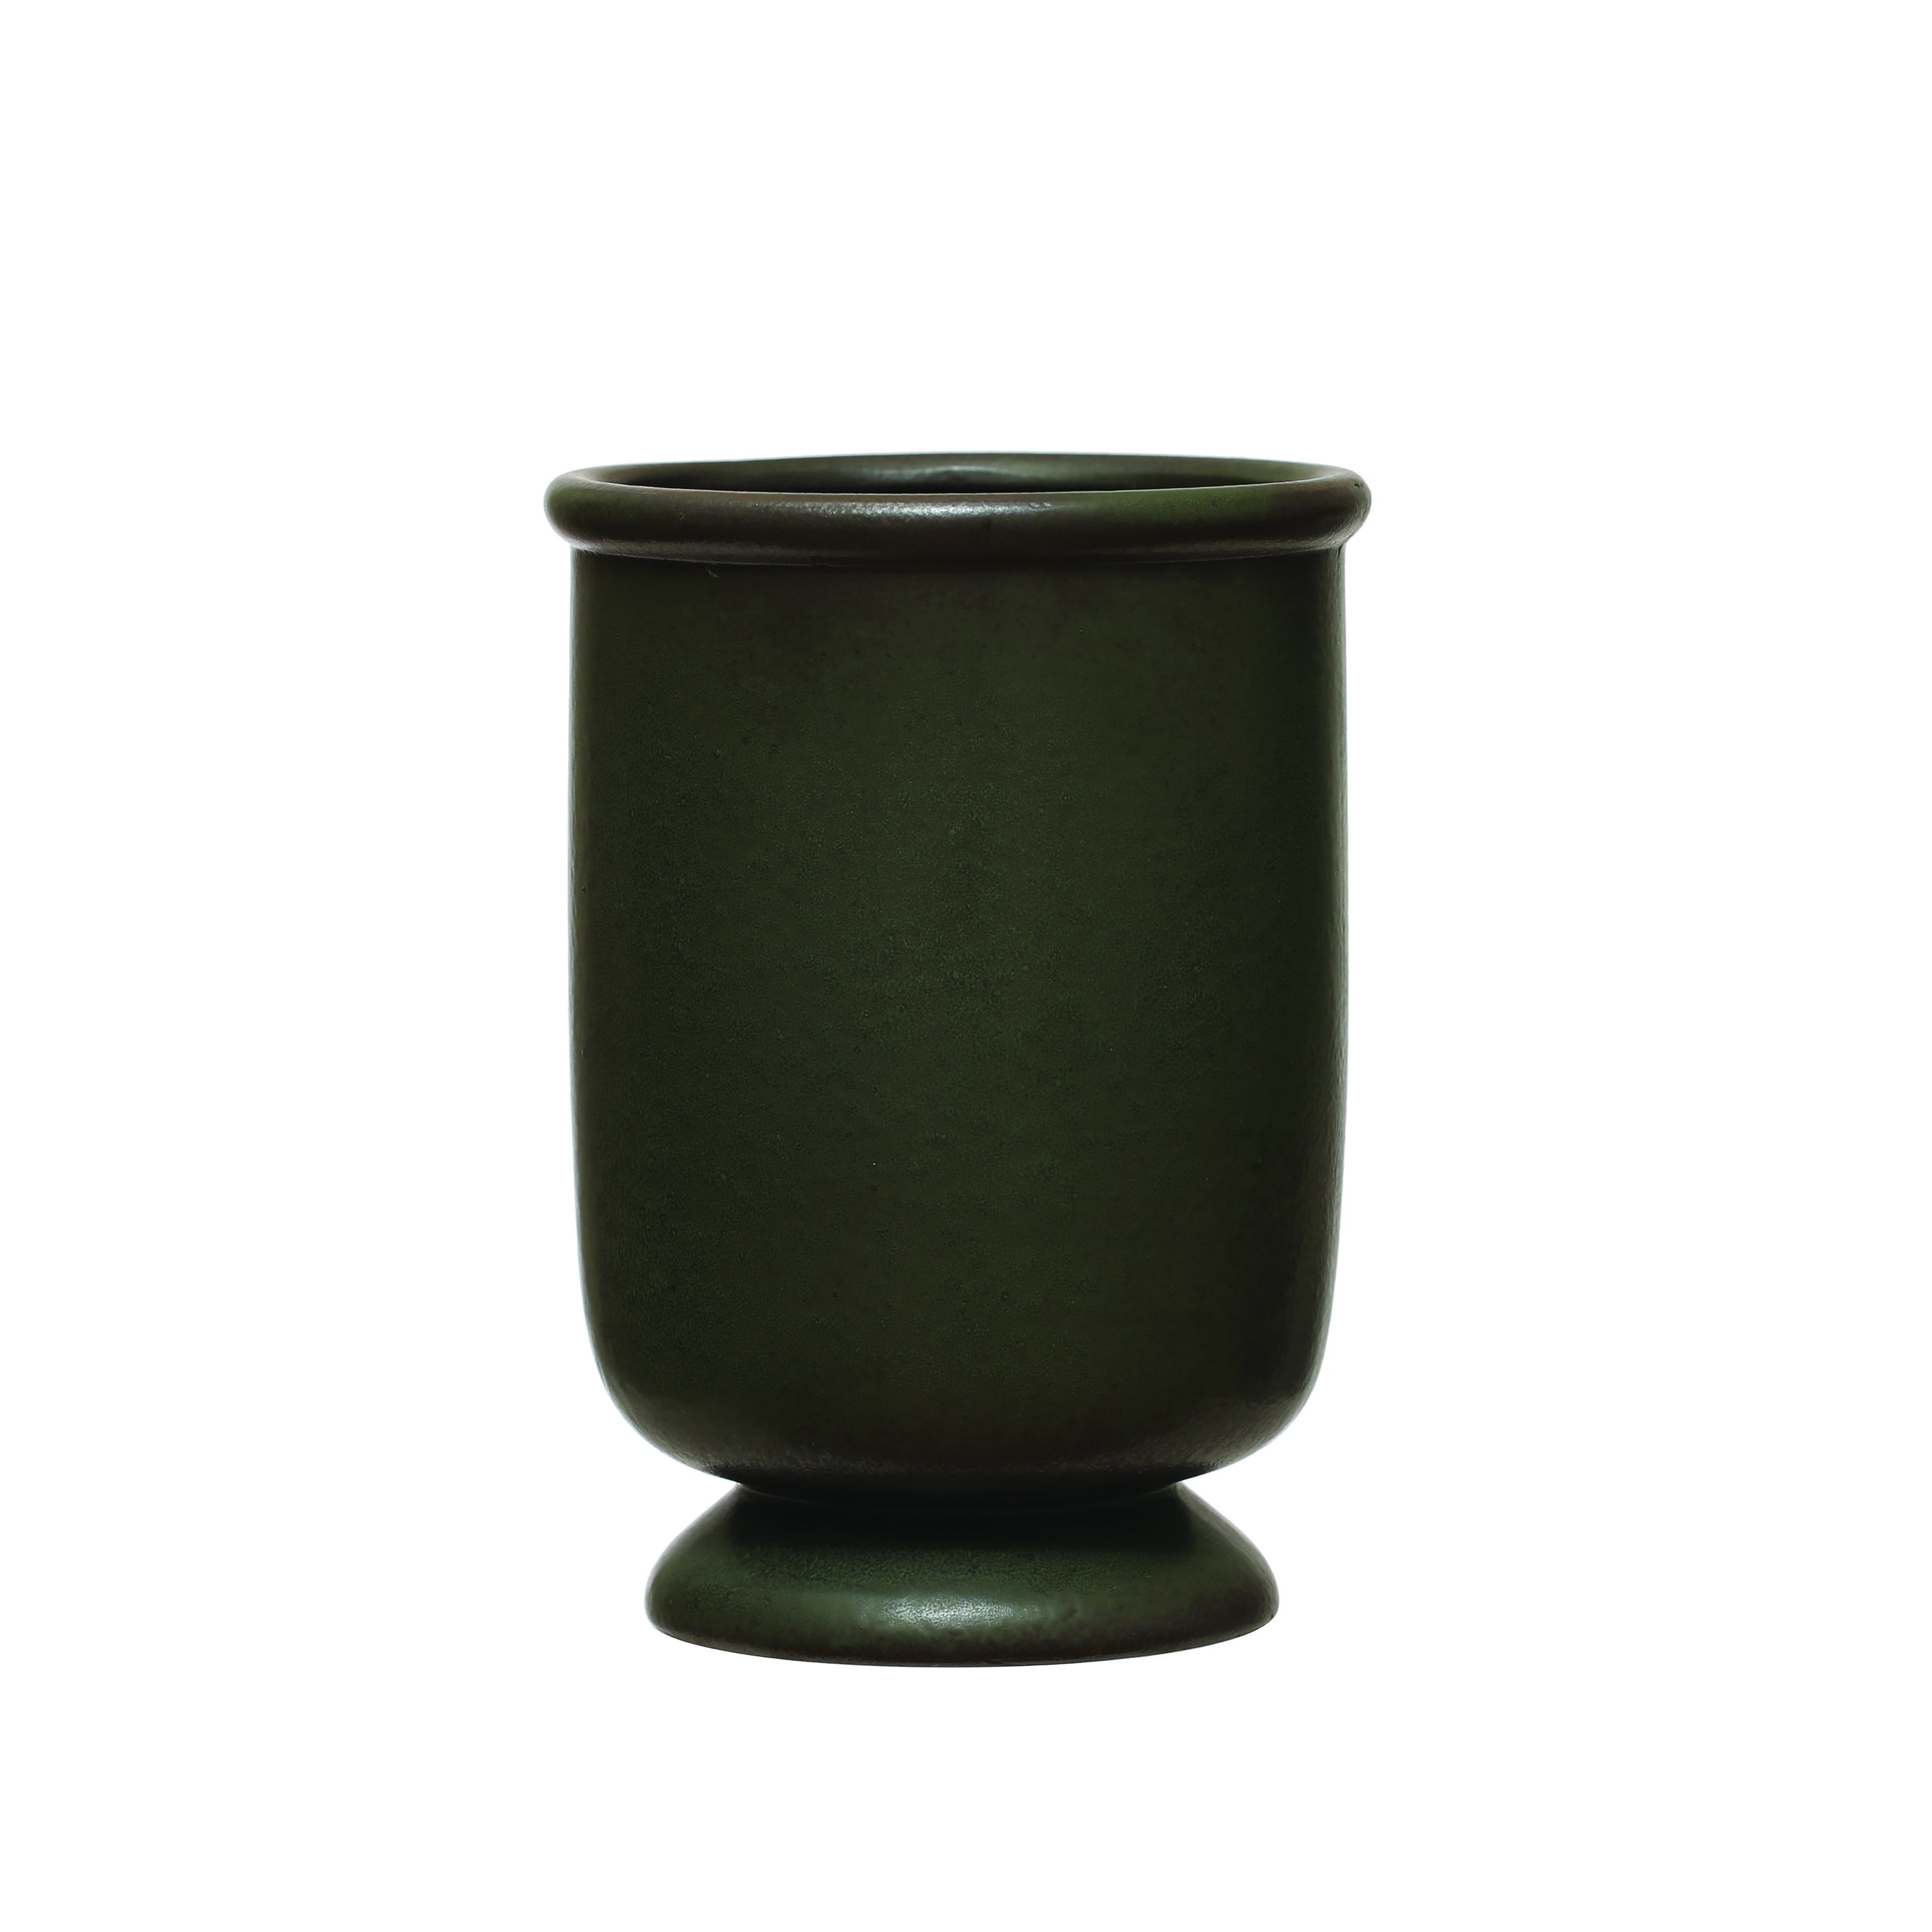 6.5 Inches Round Stoneware Vase and Reactive Glaze, Green - Image 0